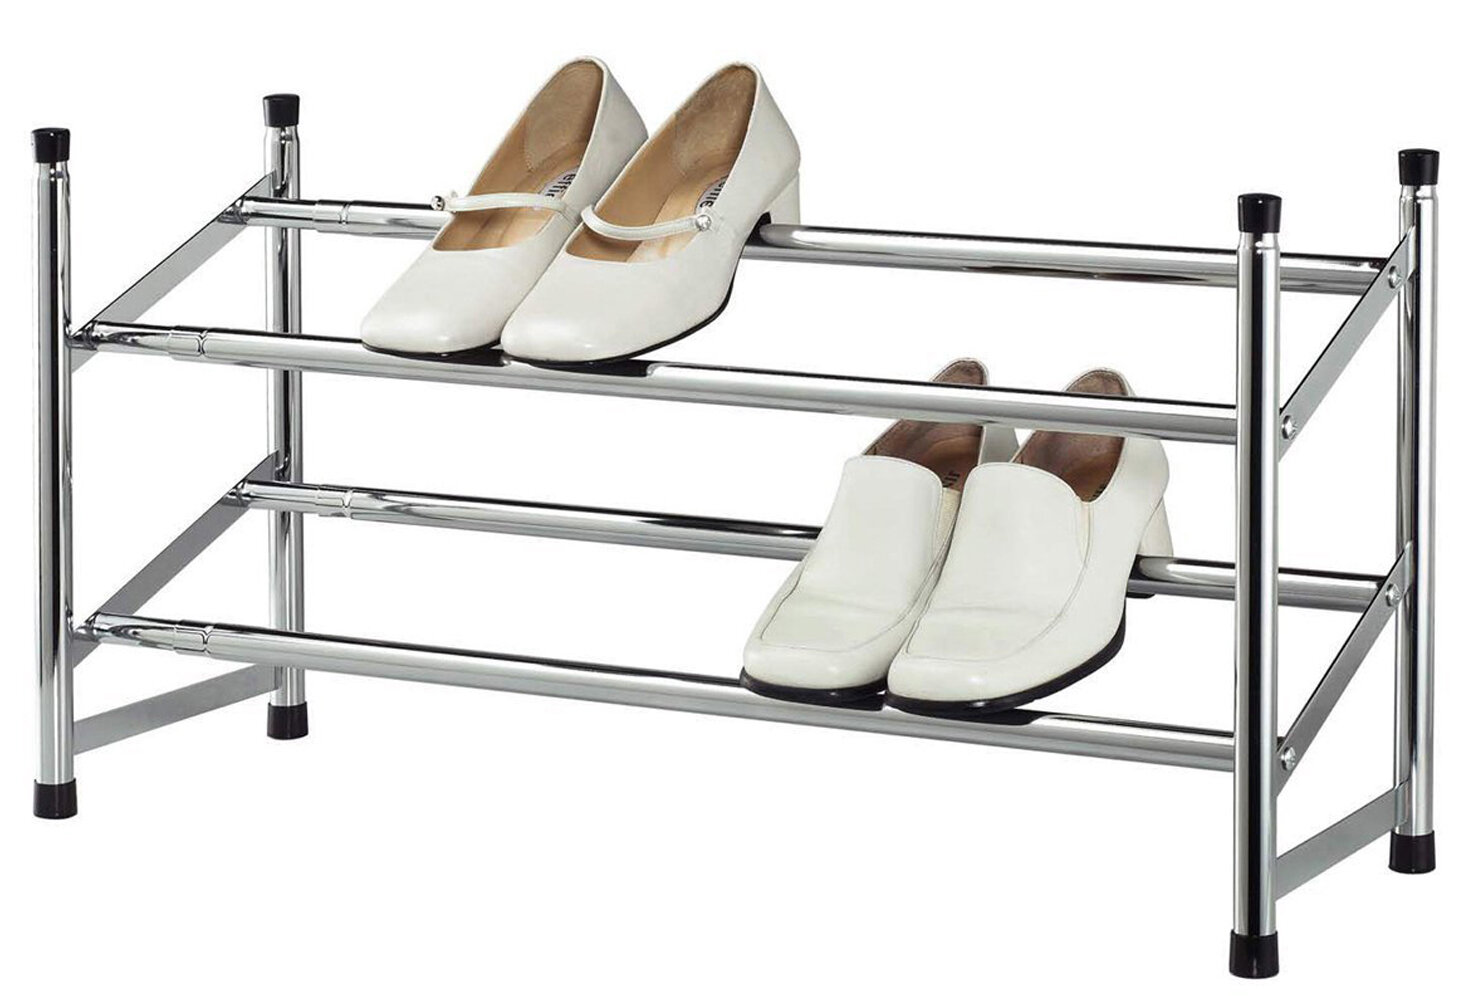 2 pair shoe rack